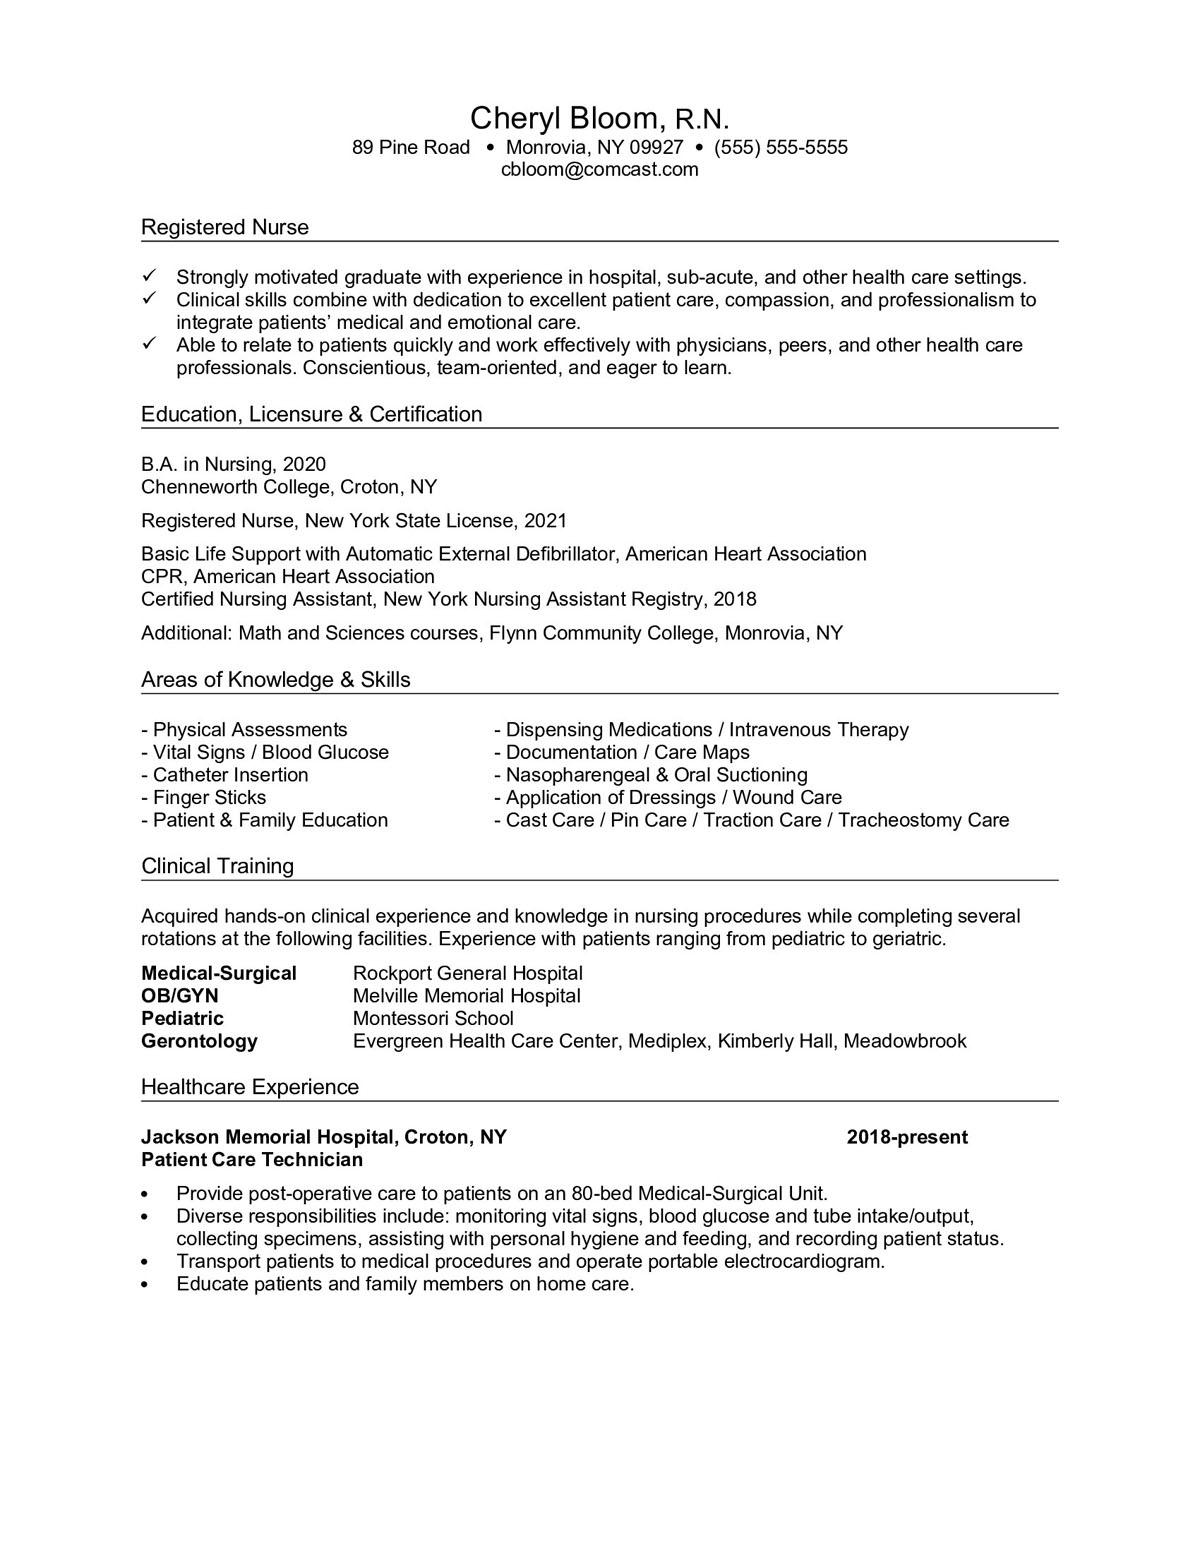 Sample resume: Nursing, Low Experience, Combination